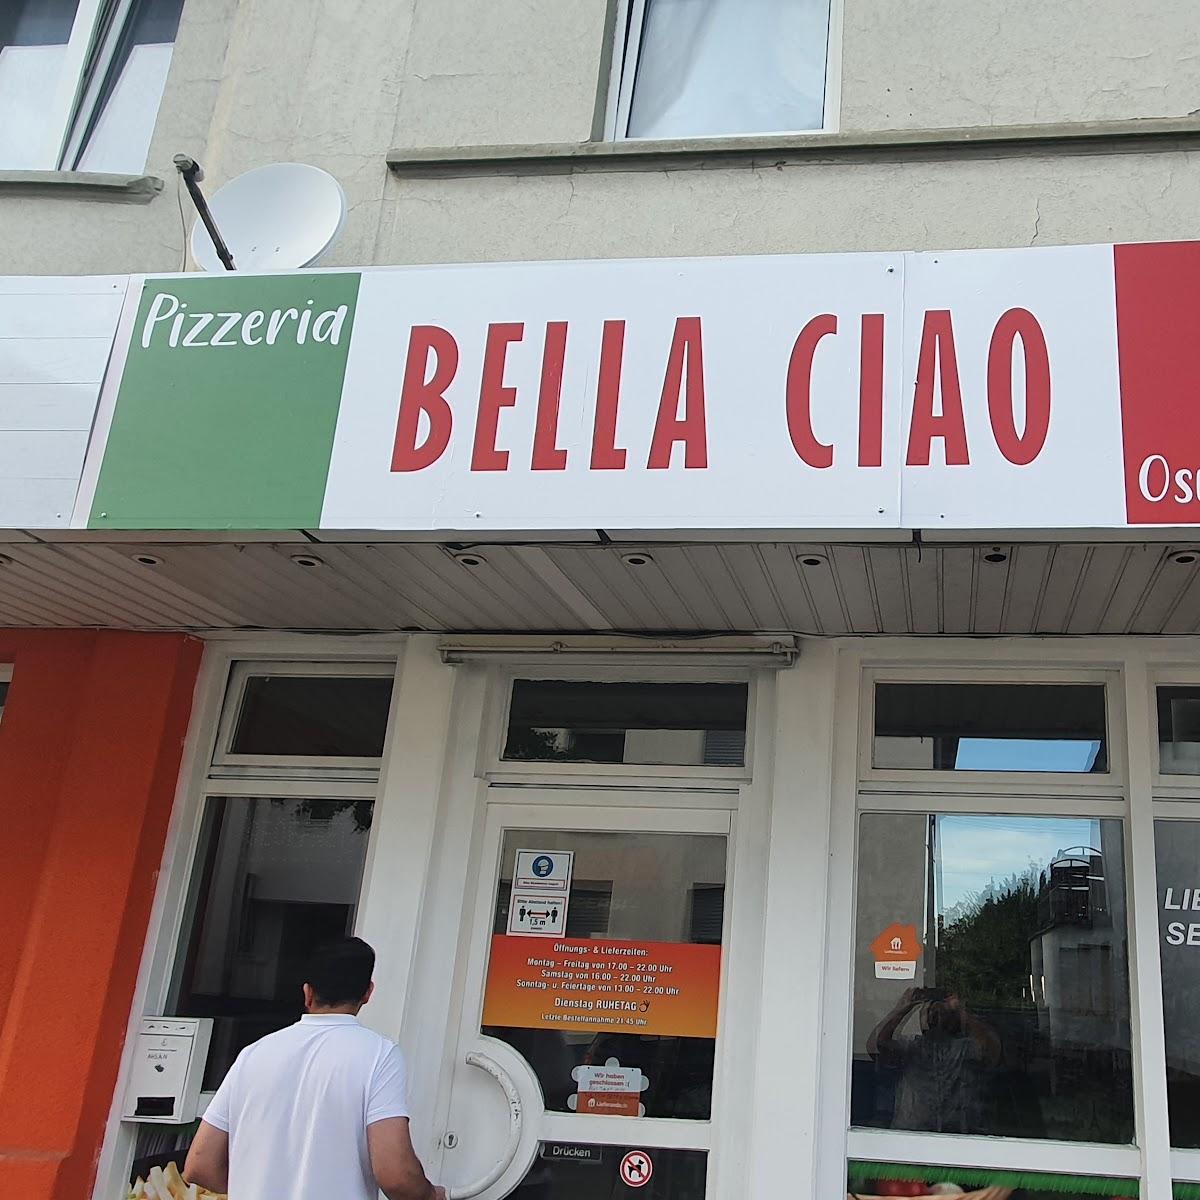 Restaurant "Pizzeria Bella Ciao Osnabrück" in Osnabrück